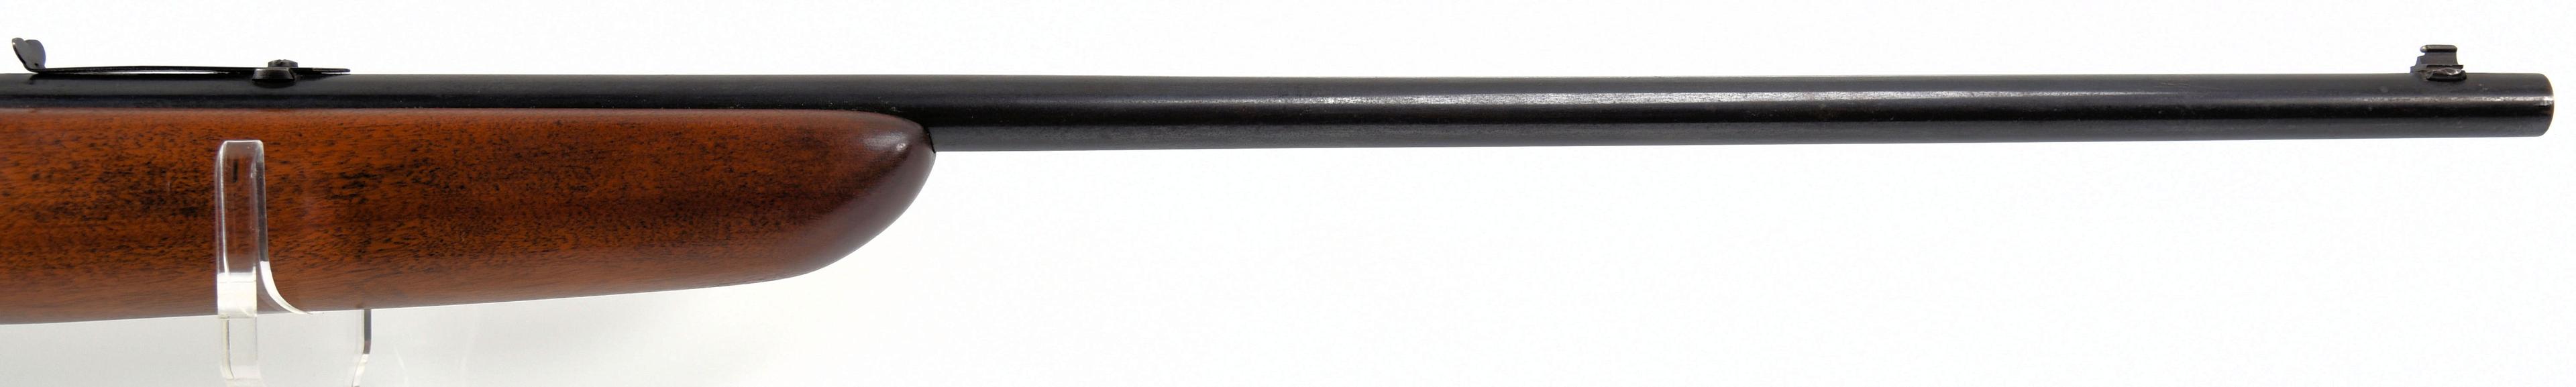 MARLIN  - SEARS & ROEBUCK 103.2 RANGER Bolt Action Rifle